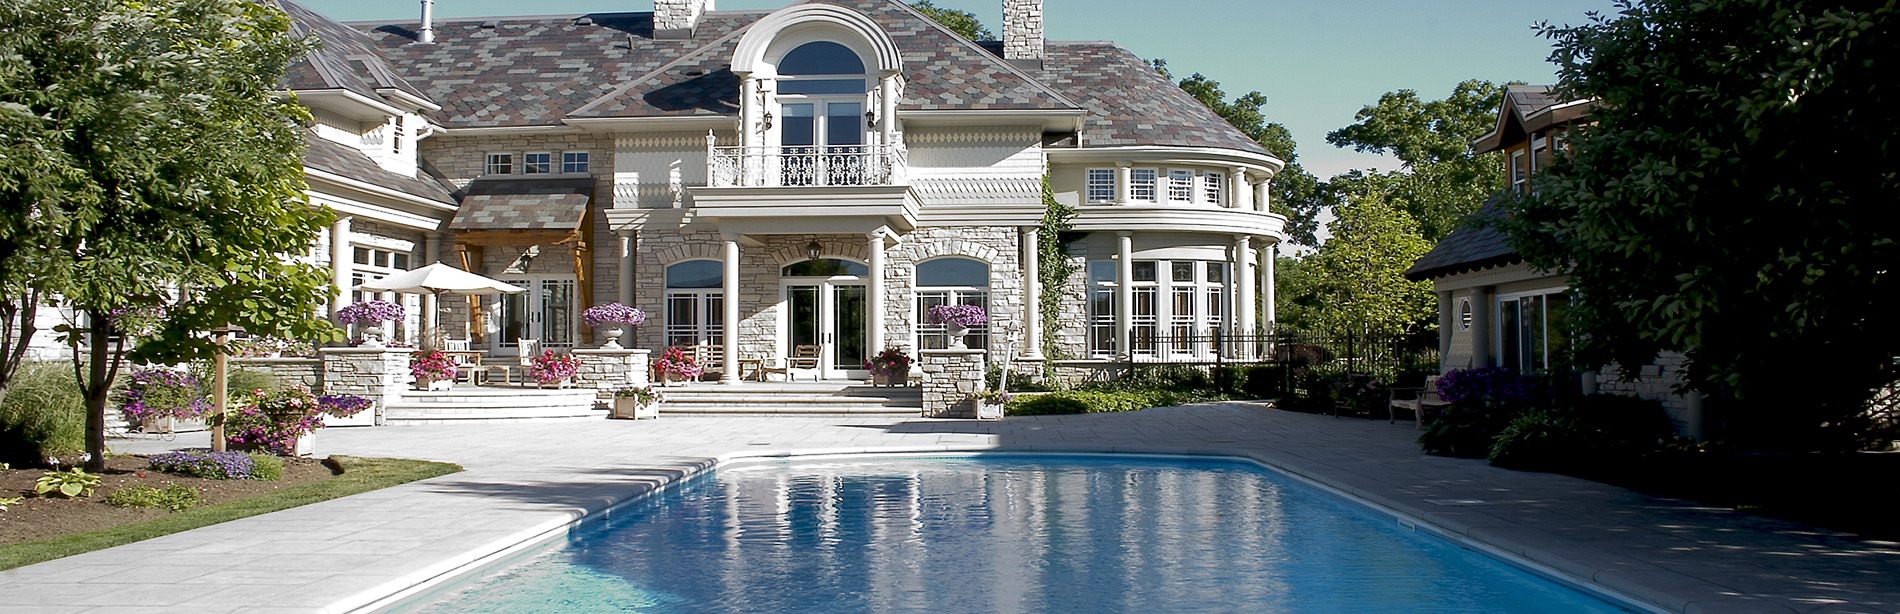 Mansion's Pool